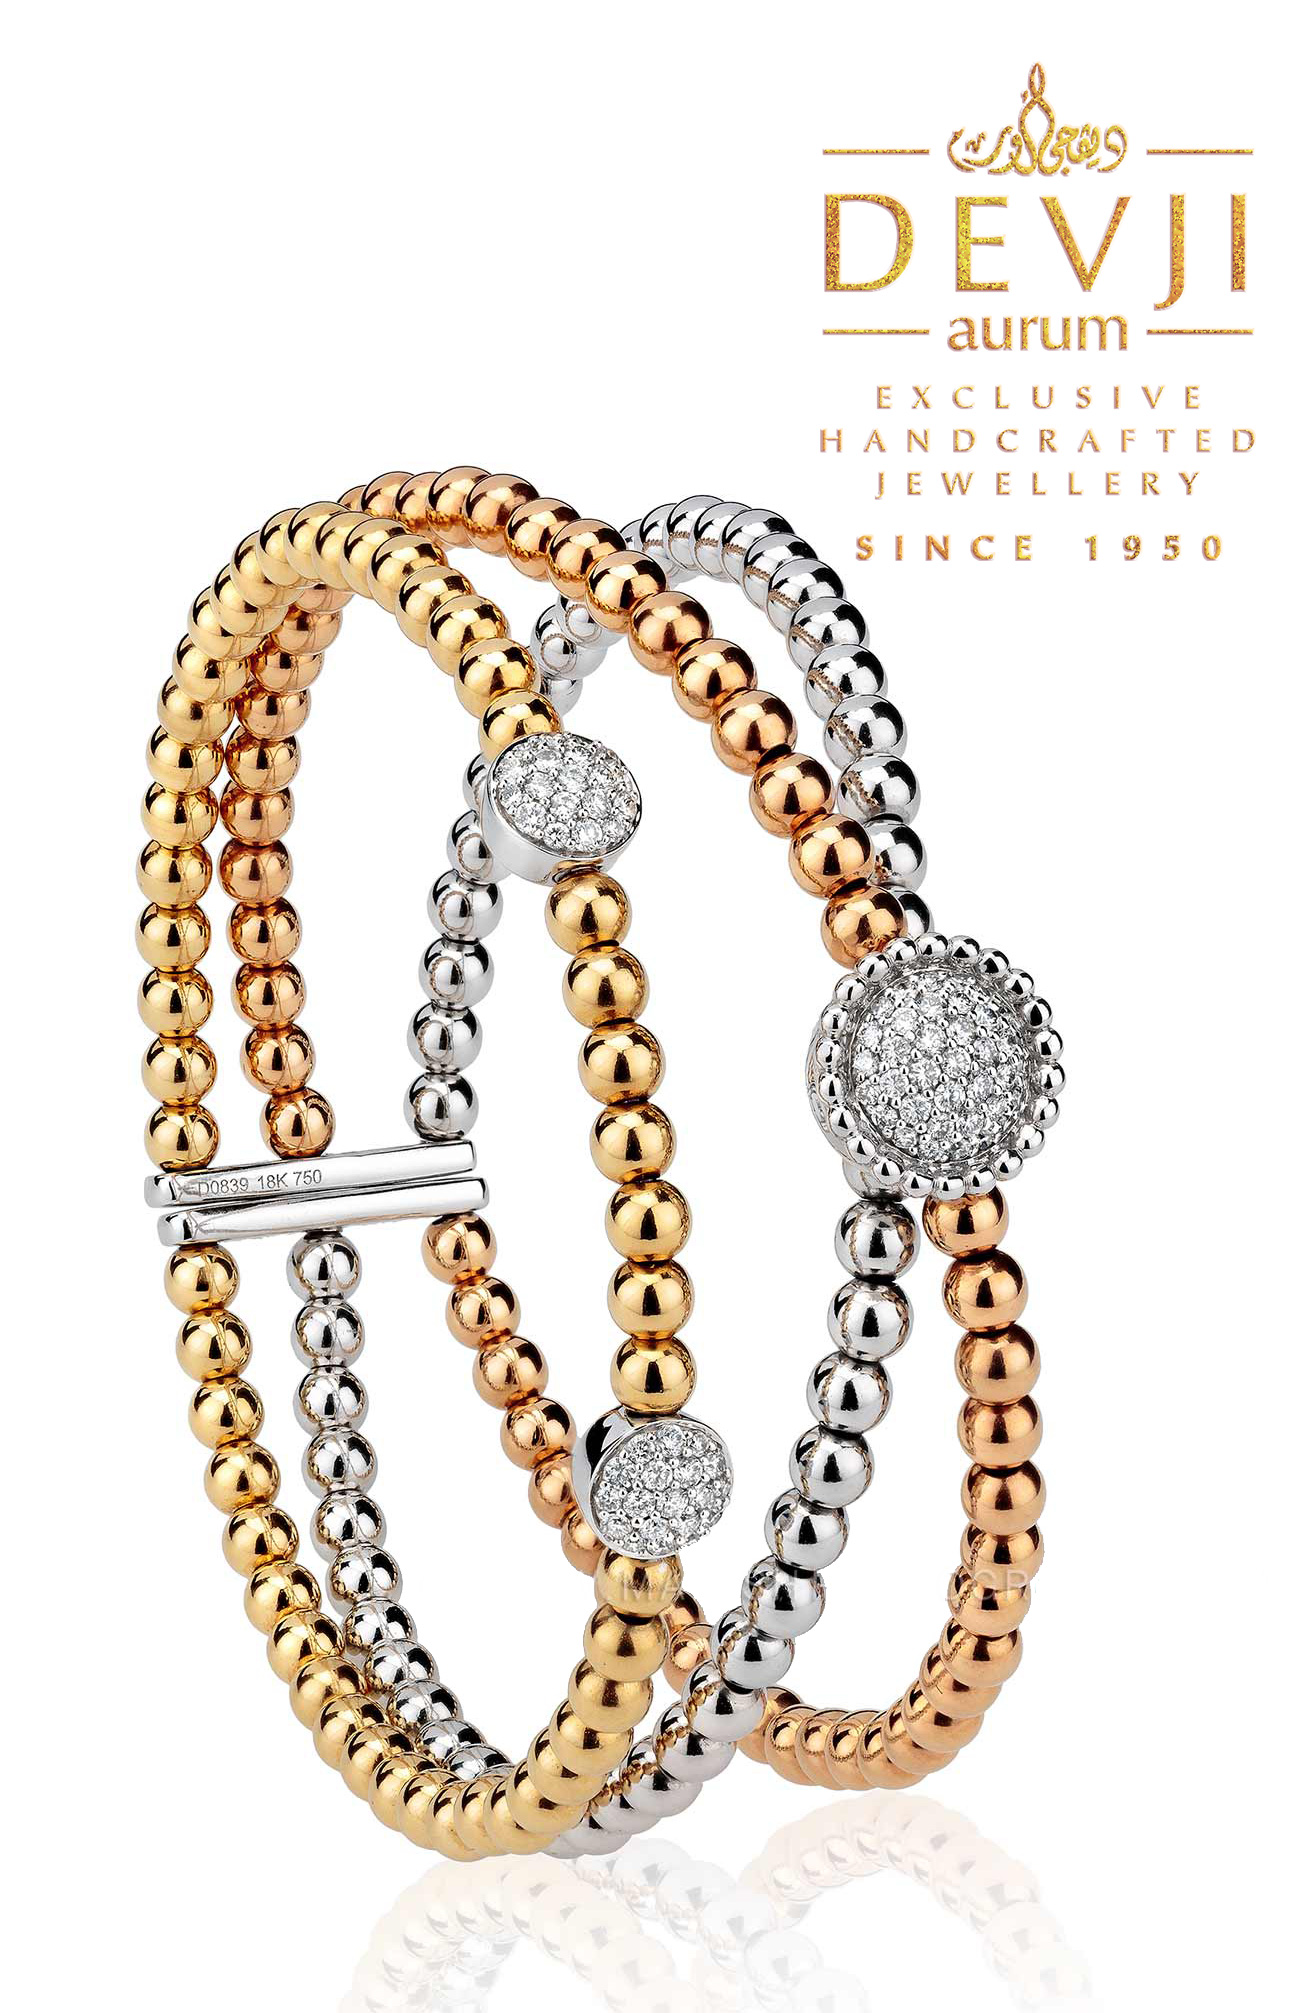 Devji-Aurum-Jewellery-Product-Cover